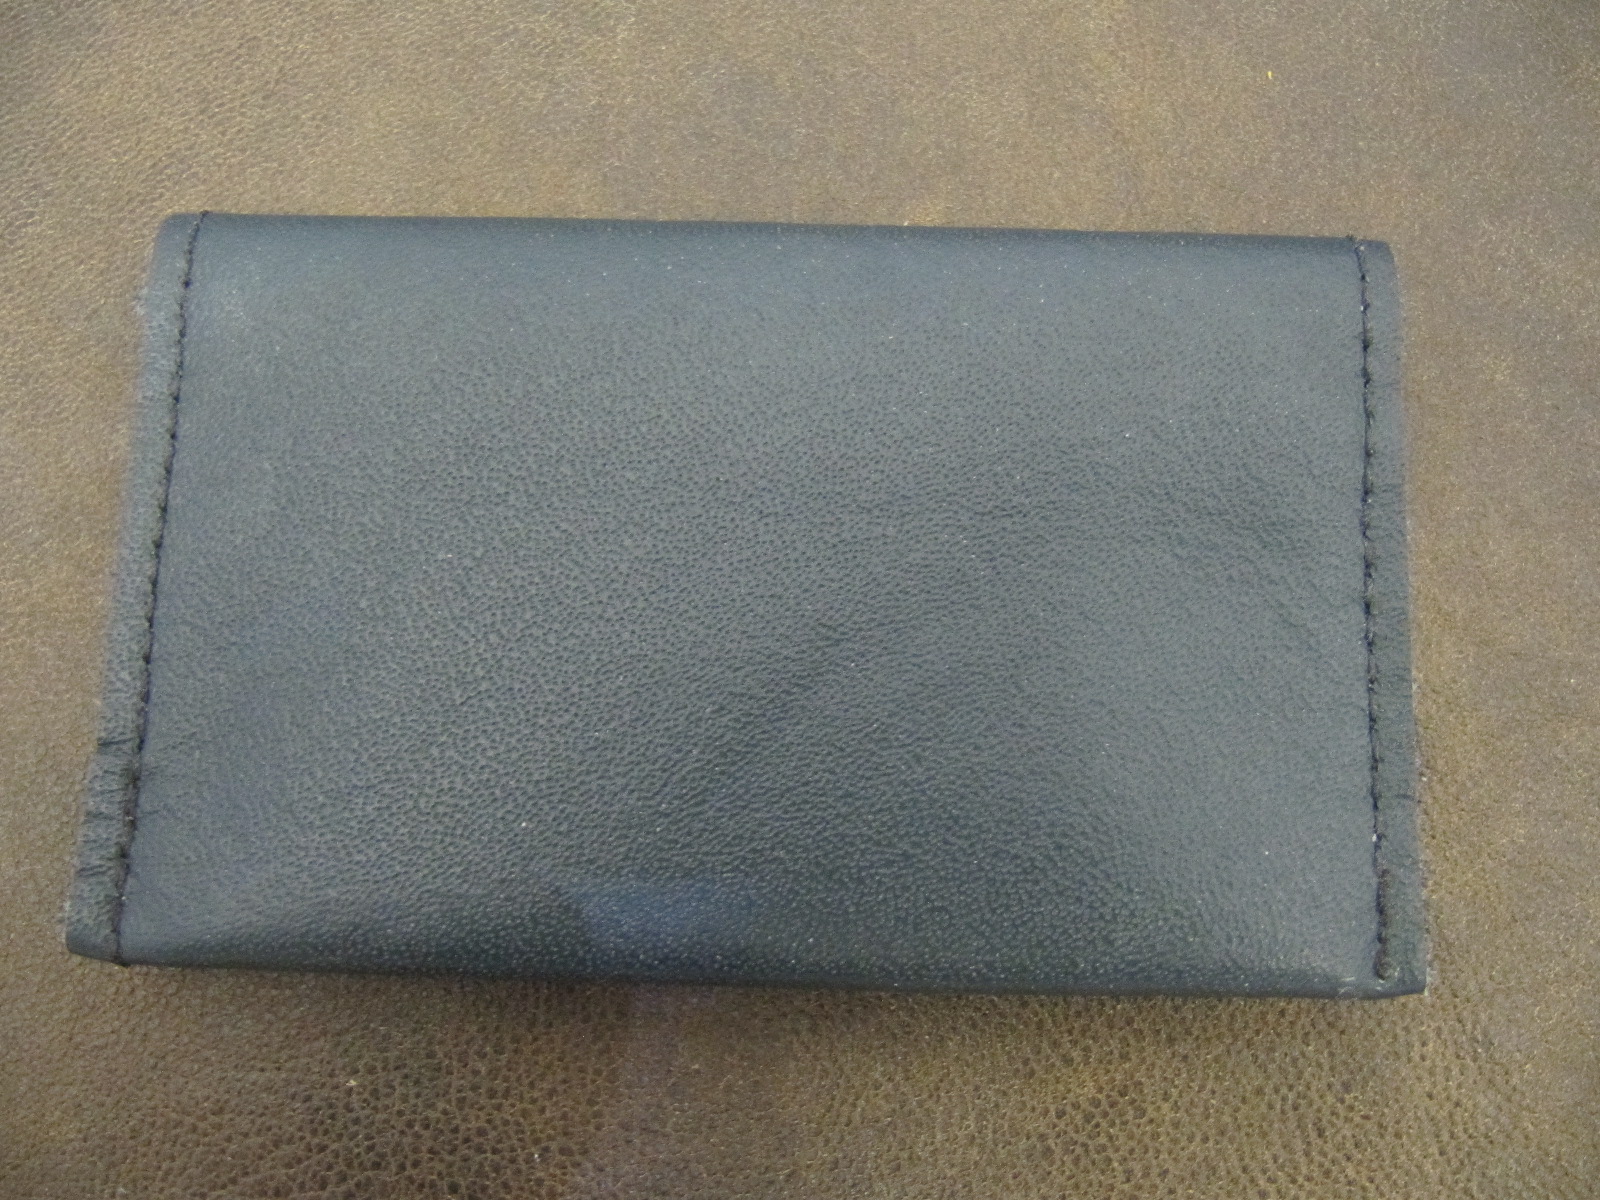 Leather card wallet - black